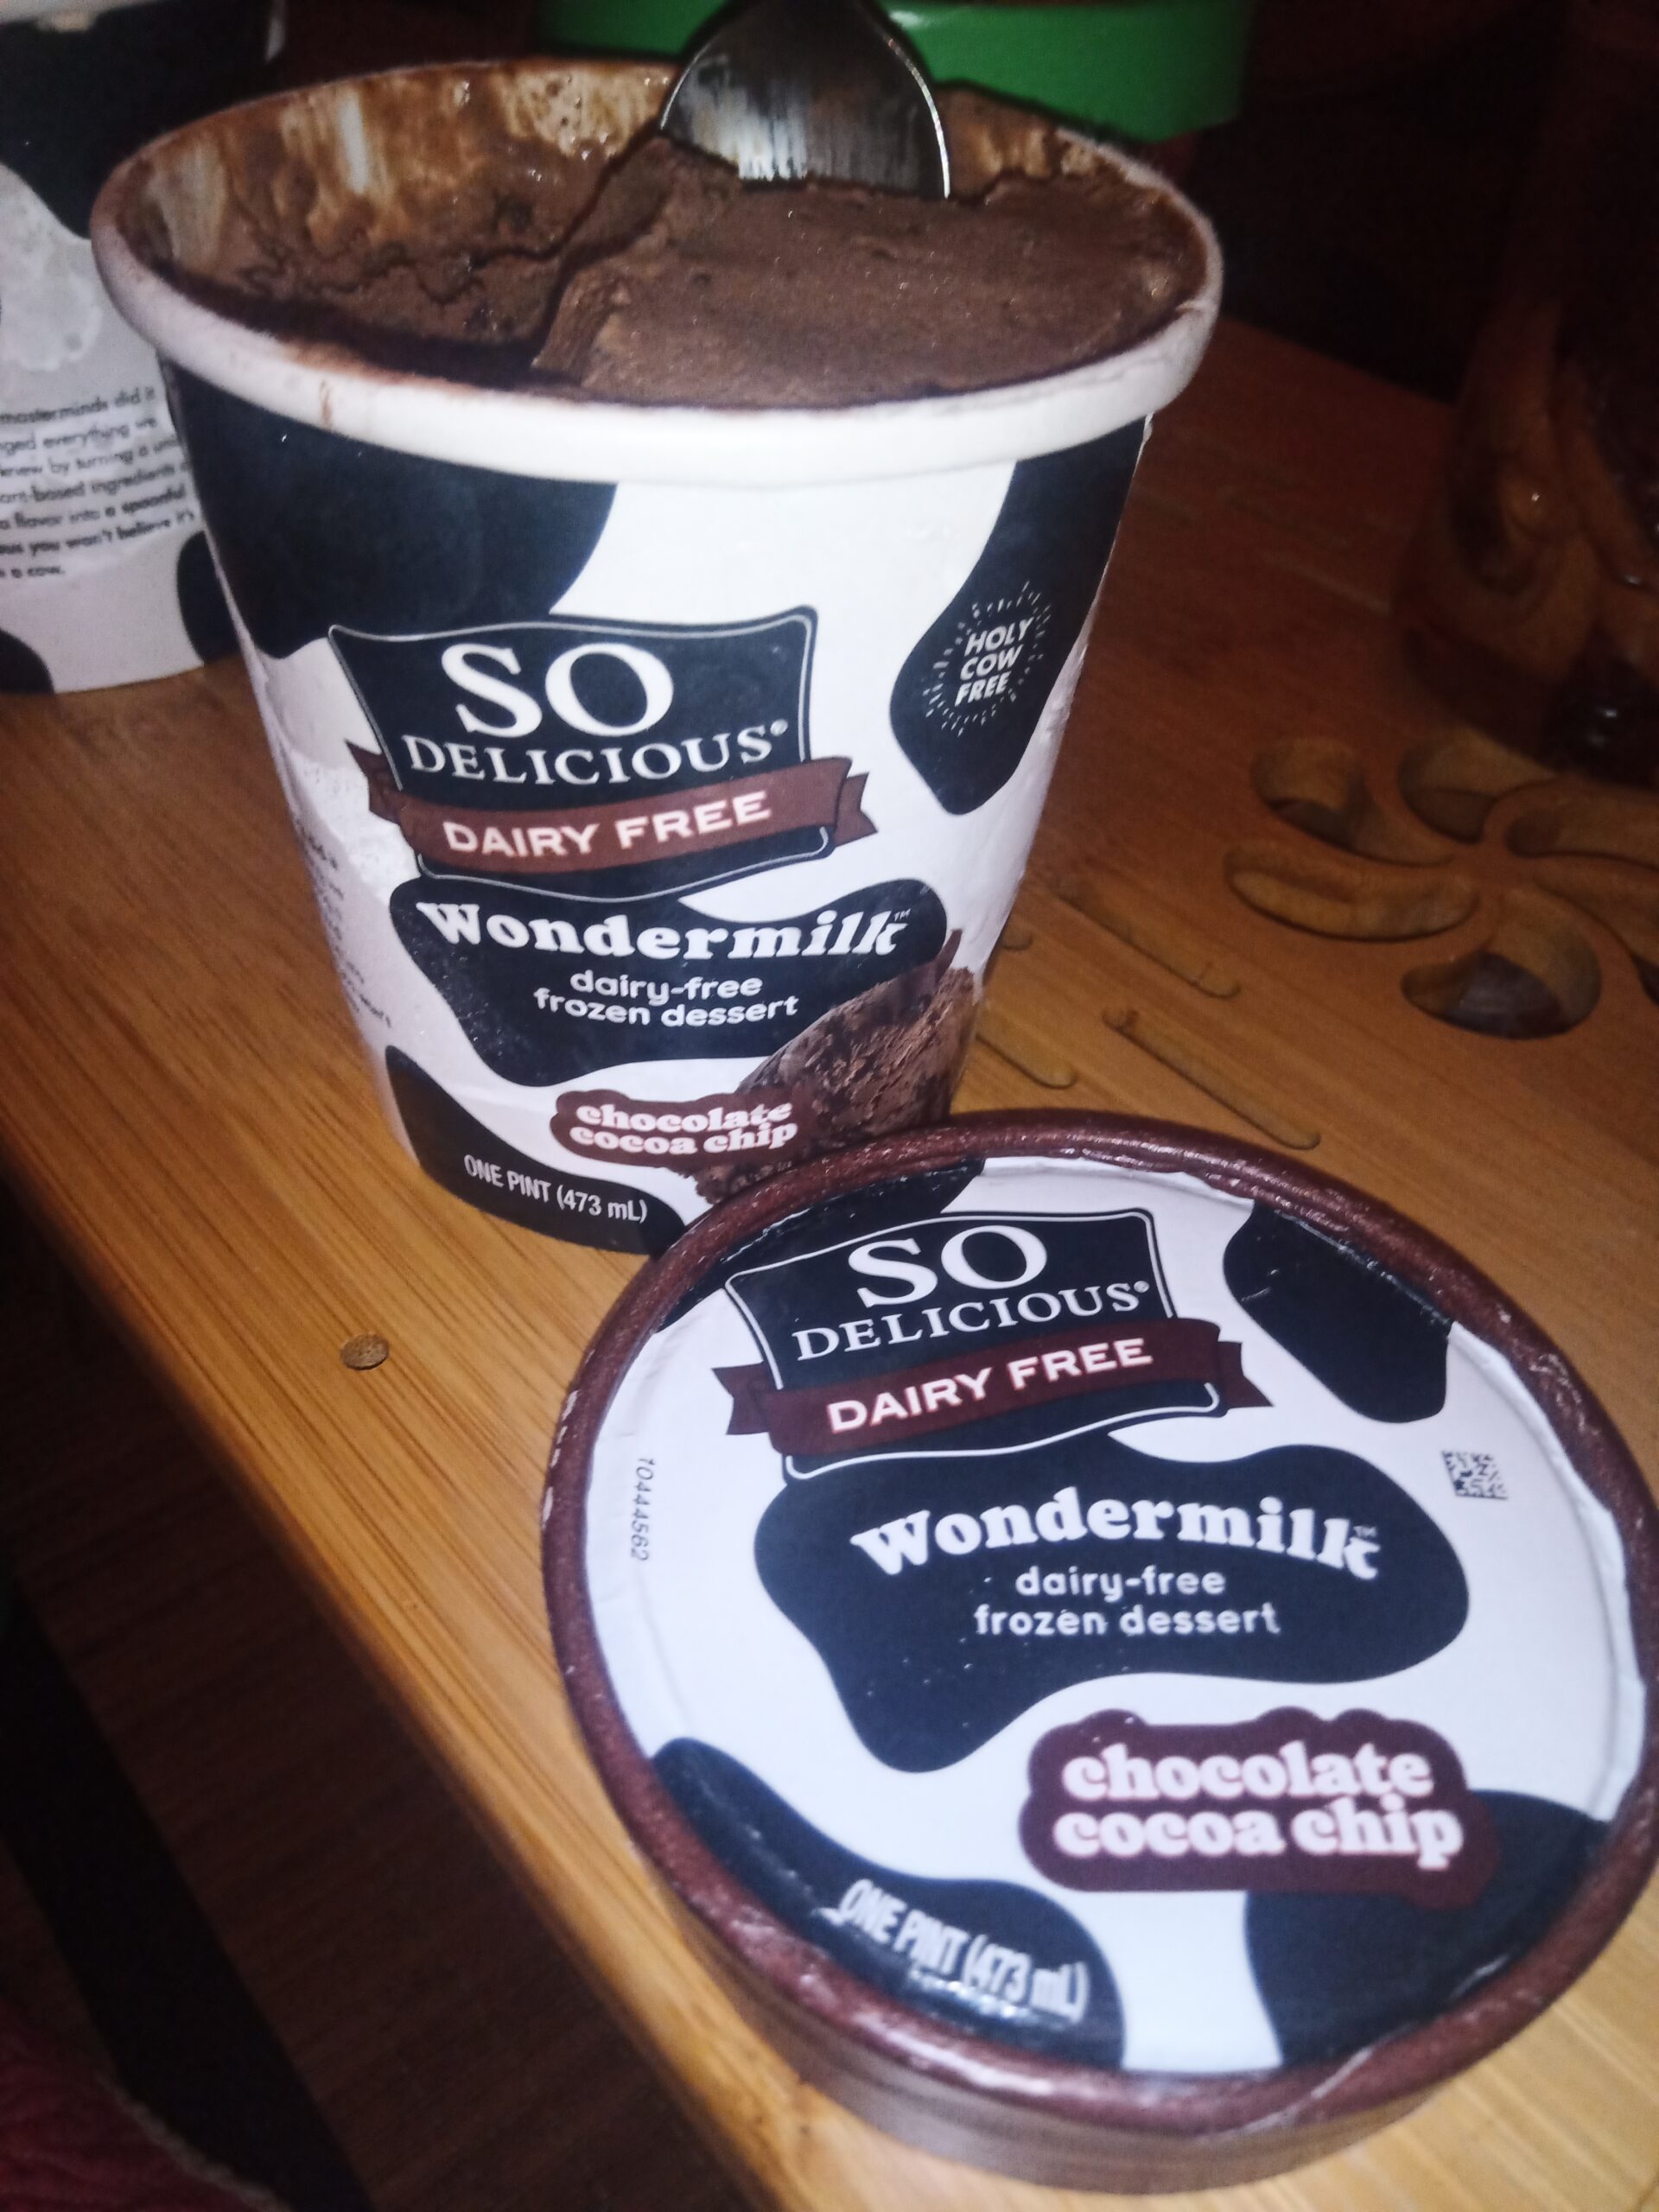 So Delicious “Wondermilk – Chocolate Cocoa Chip” Ice Cream: 4.5/5 yum!! but zionism…